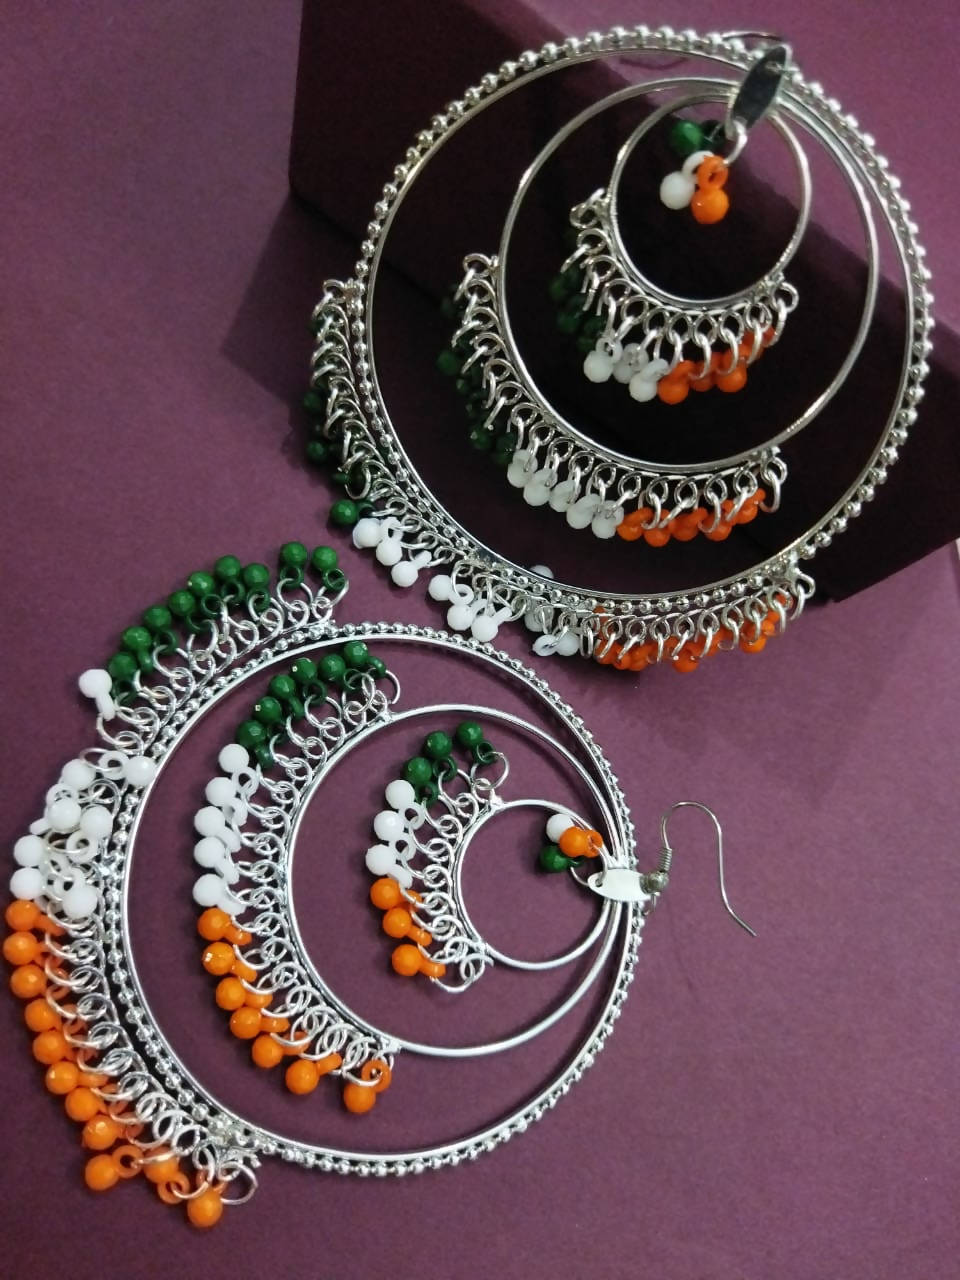 Share more than 133 tri colour earrings super hot